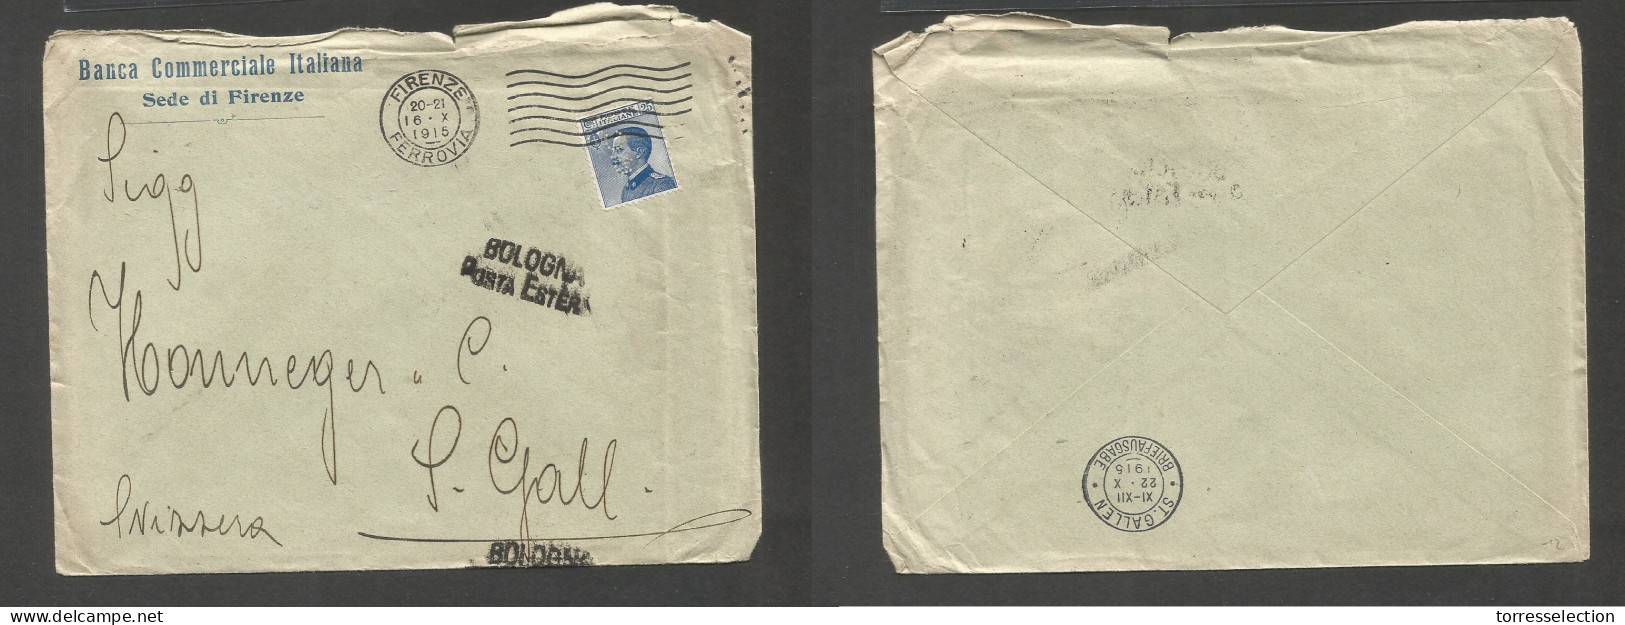 Italy - XX. 1915 (16 Oct) Perfin. BCI. Firenze - Switzerland, St. Gallen (22 Oct) Single Fkd Envelope. SALE. - Non Classificati